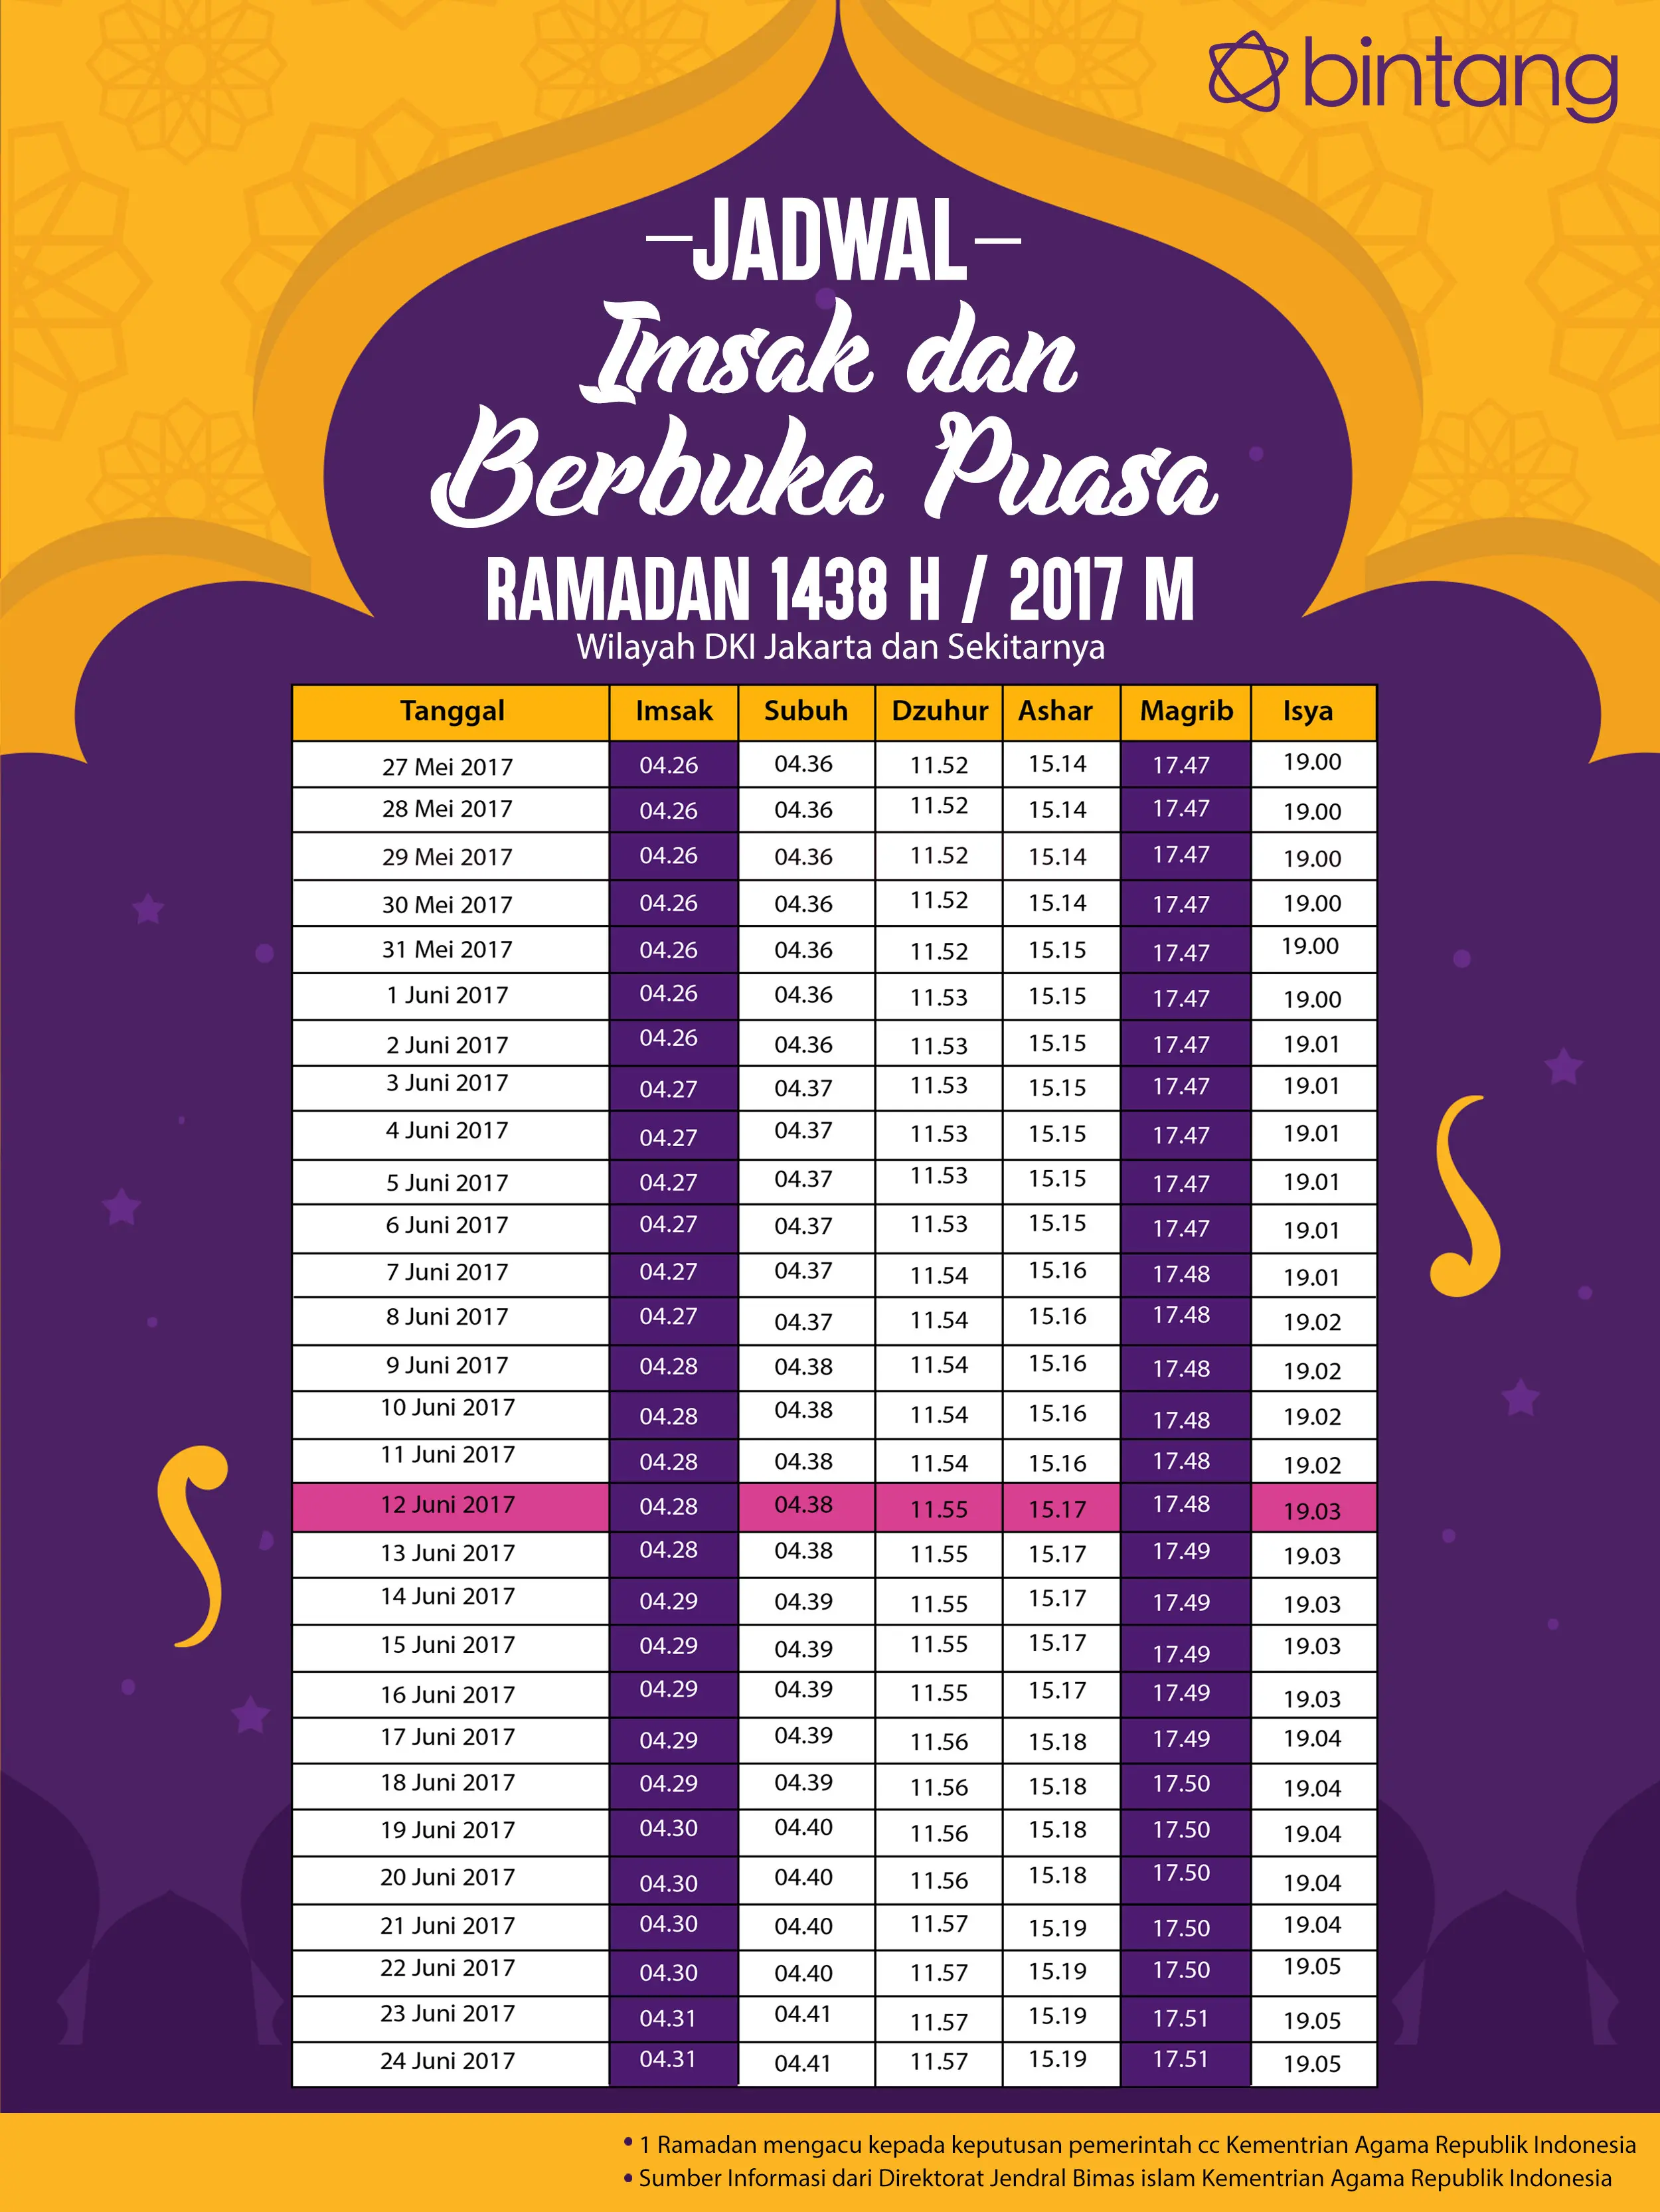 Berikut jadwal imsak, puasa hari ke-17, 12 Juni 2017. (Digital Imaging: Muhammad Iqbal Nurfajri/Bintang.com)